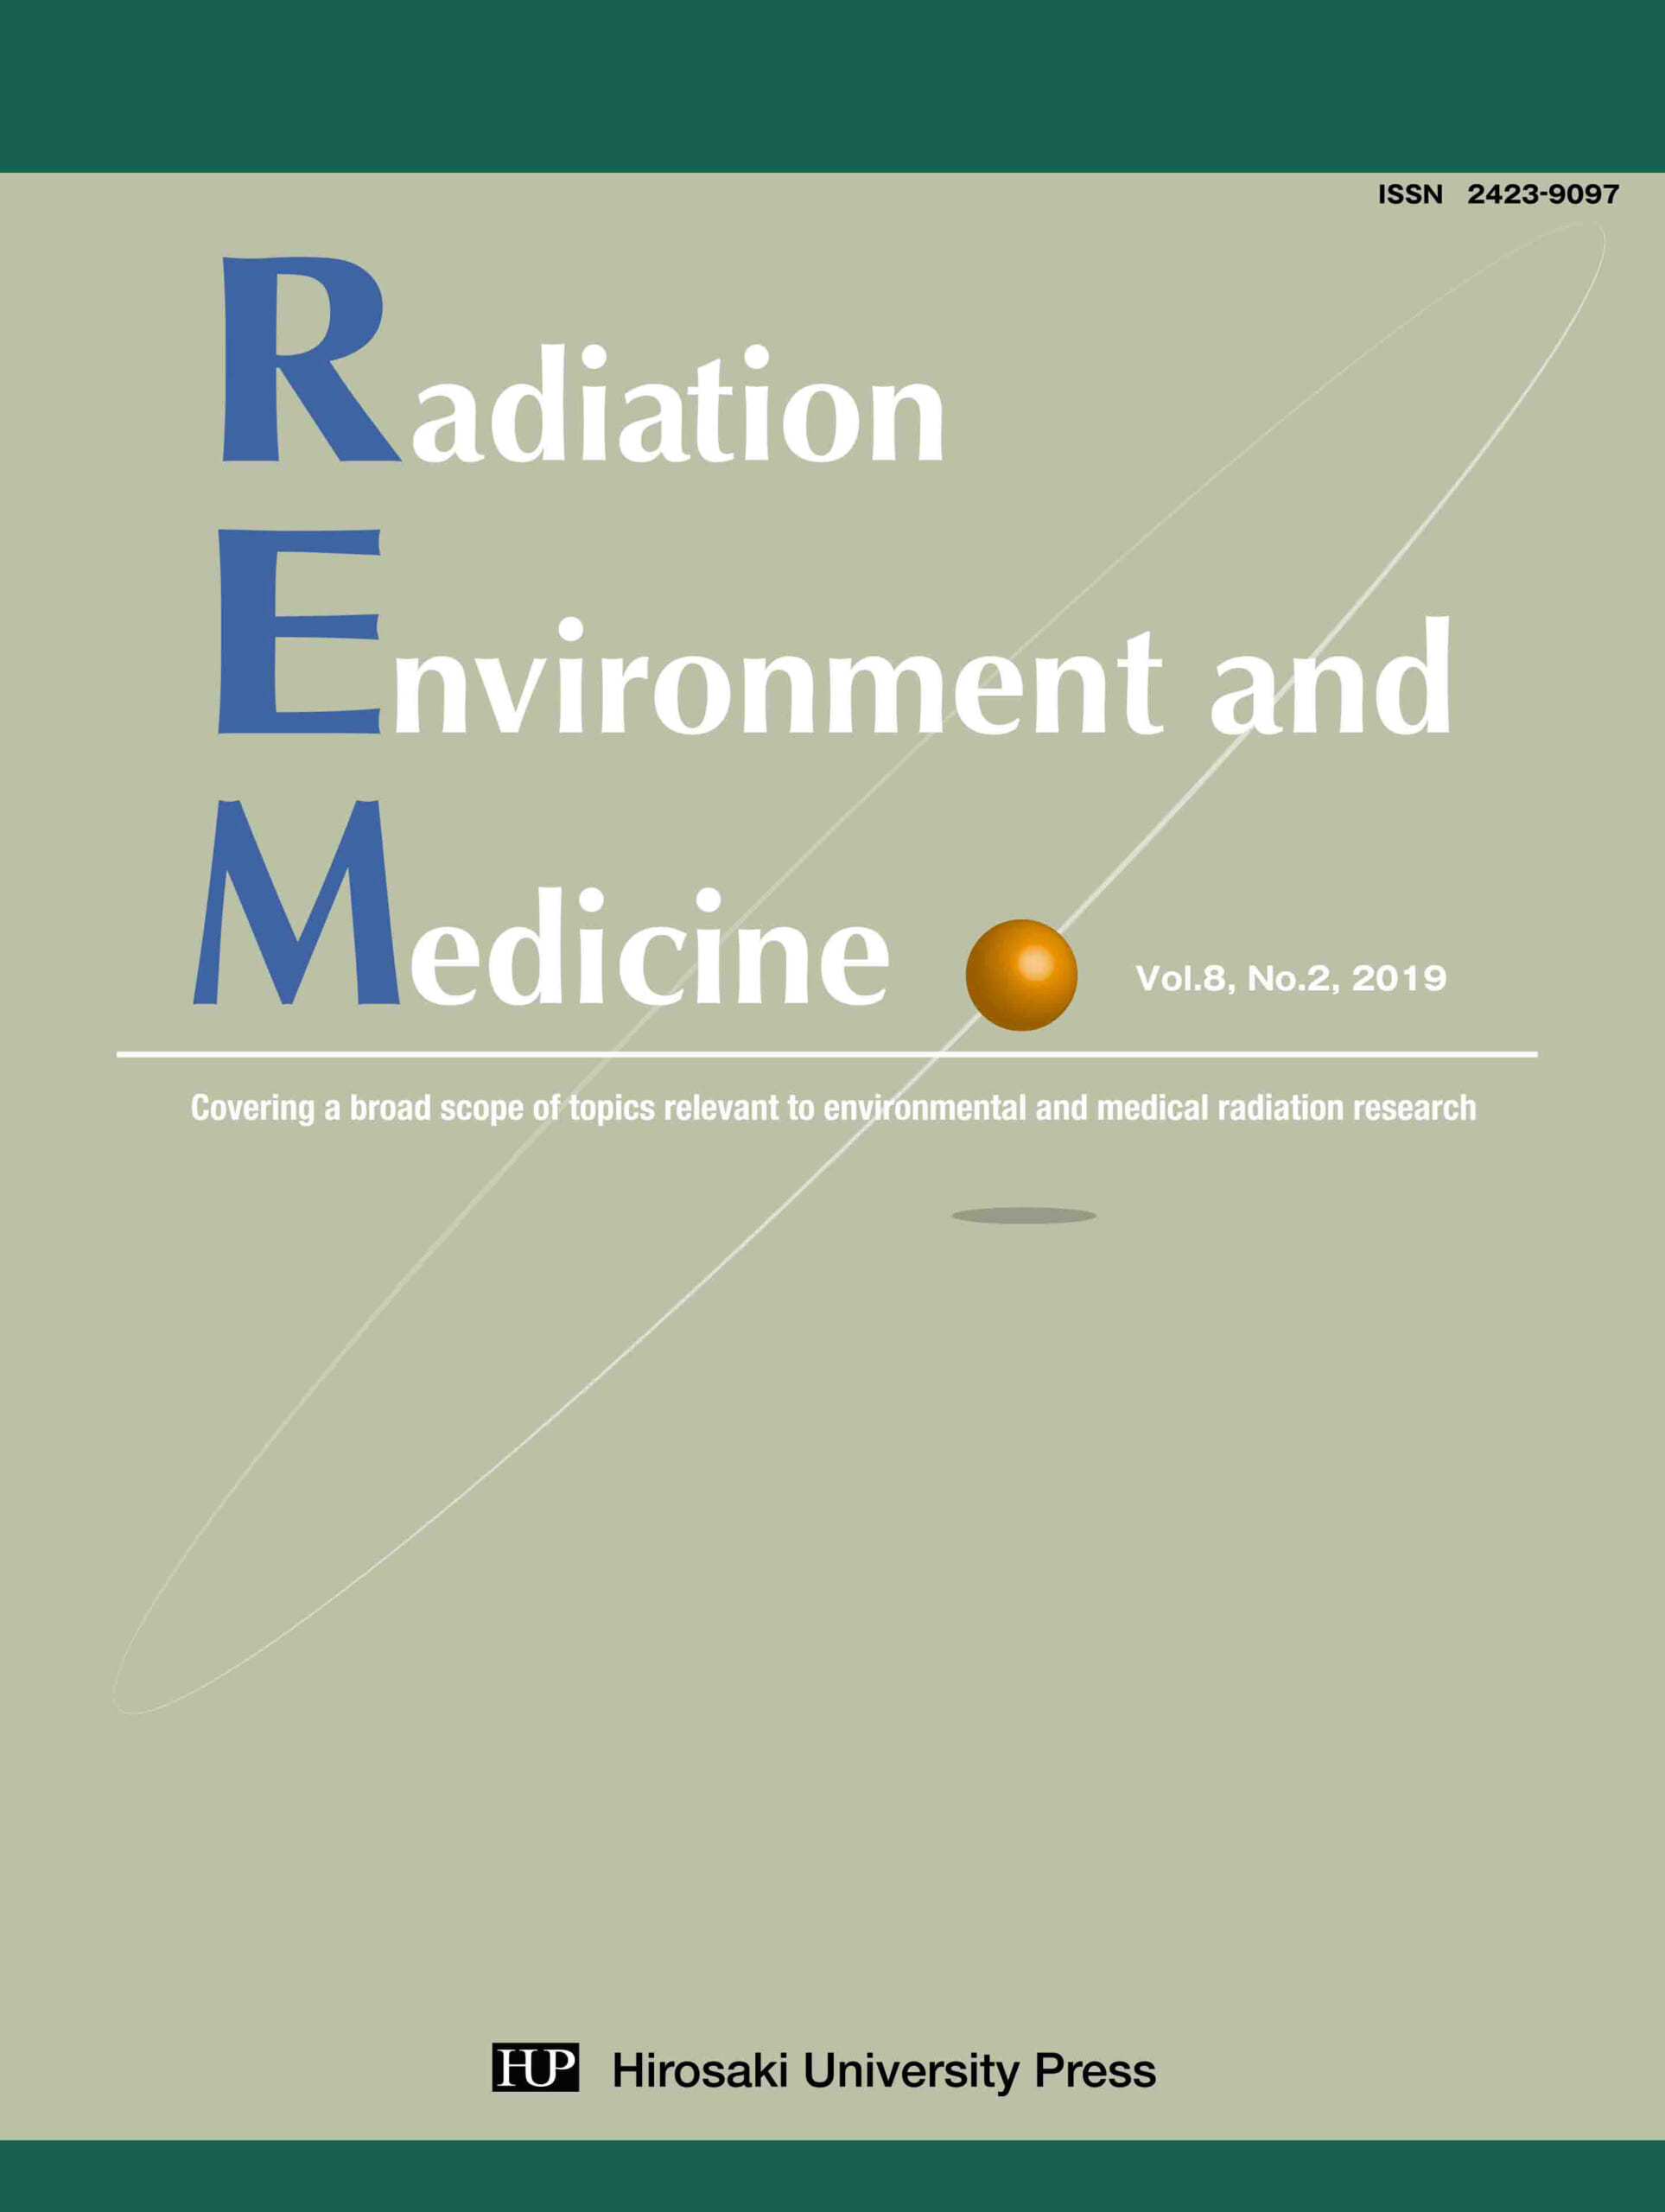 Radiation Environment and Medicine Vol.8, No.2 cover